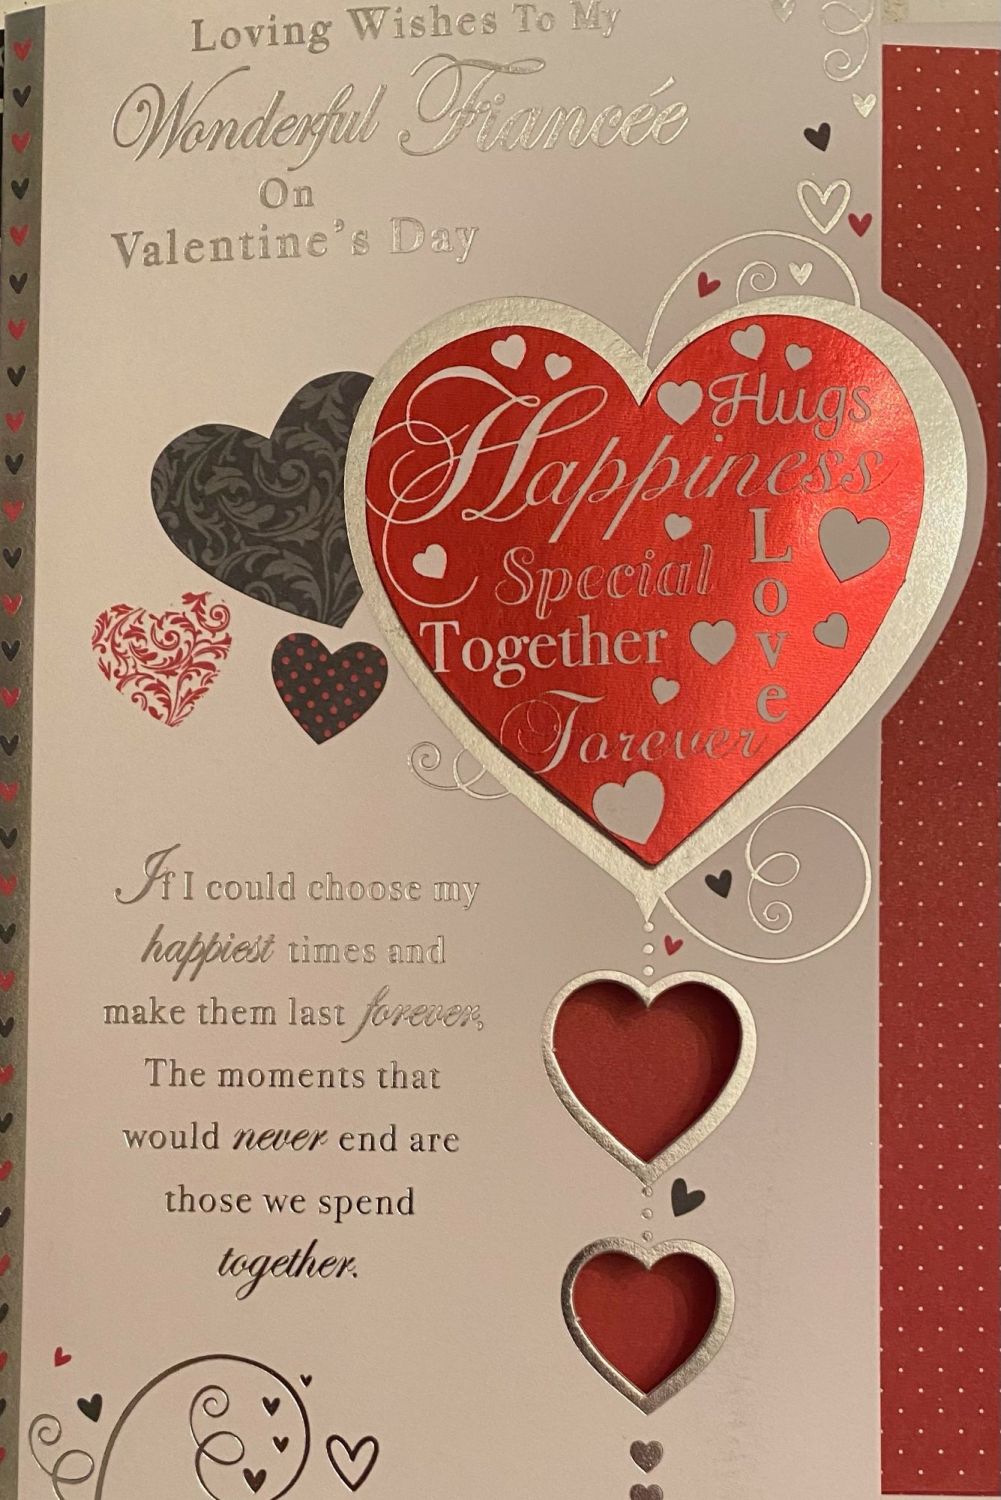 Loving Wishes To My Wonderful Fiancee On Valentine's Day - Card